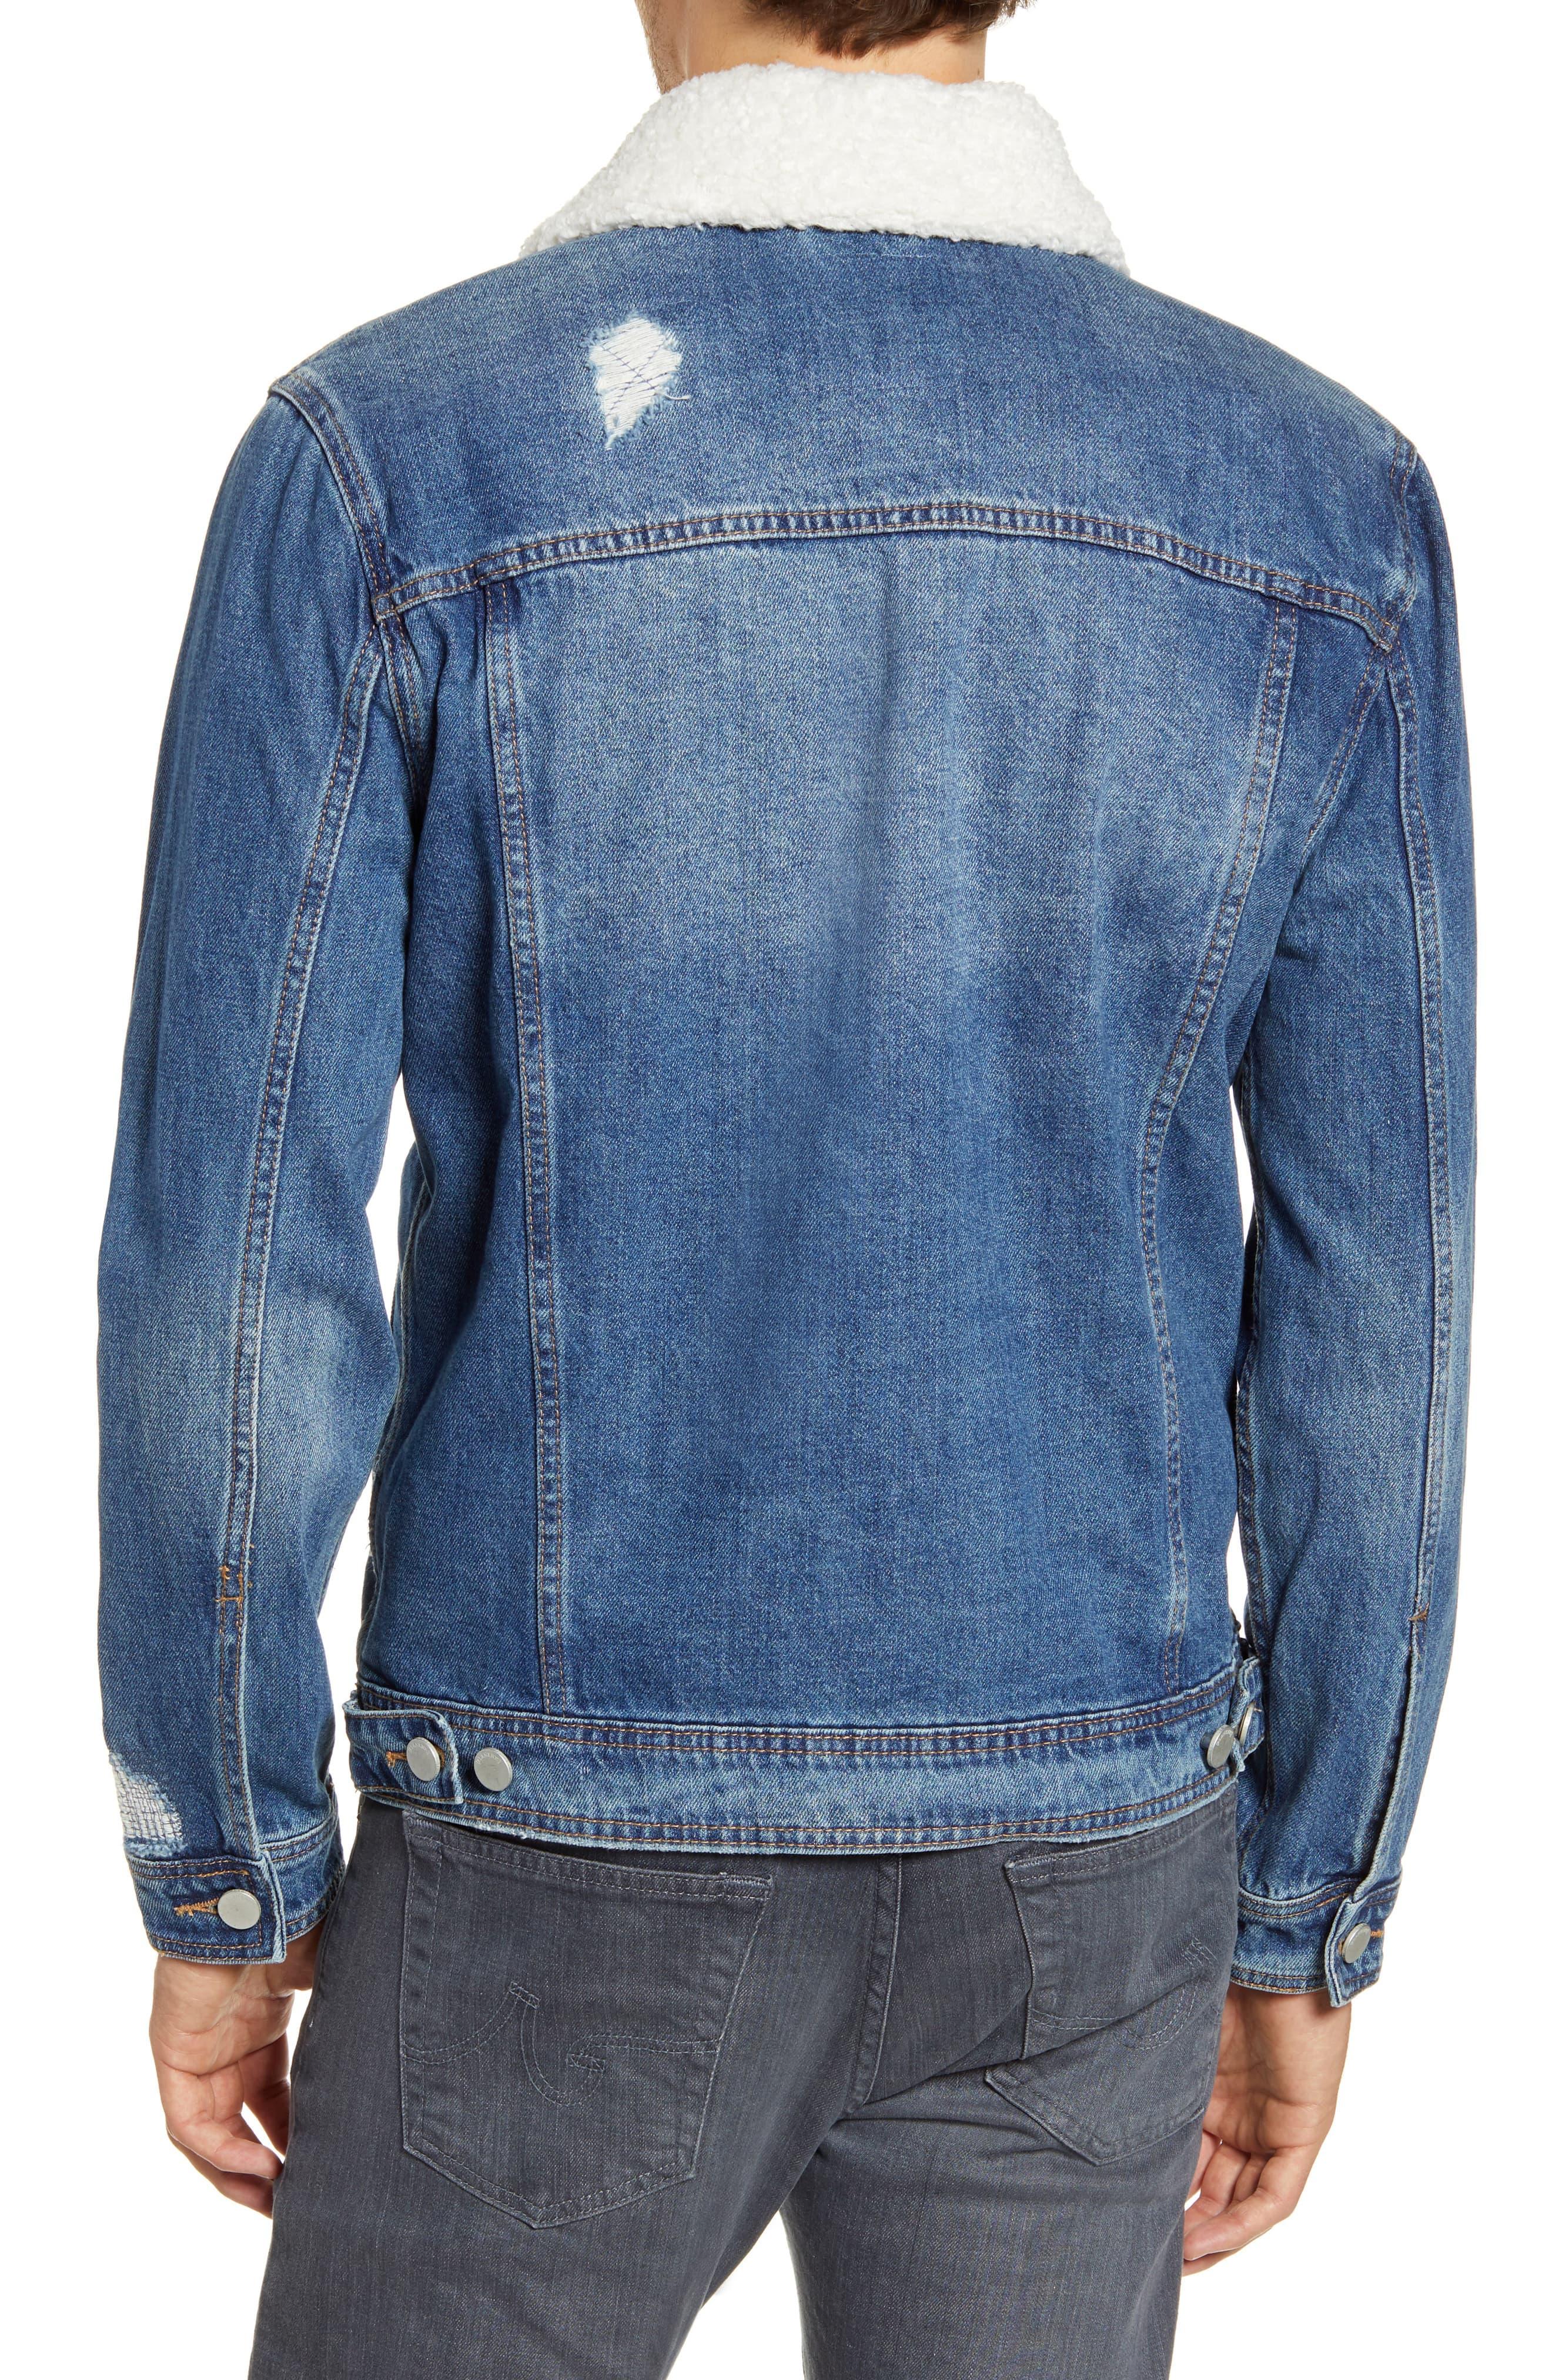 Blank NYC Fleece Collar Denim Jacket in Blue for Men - Lyst